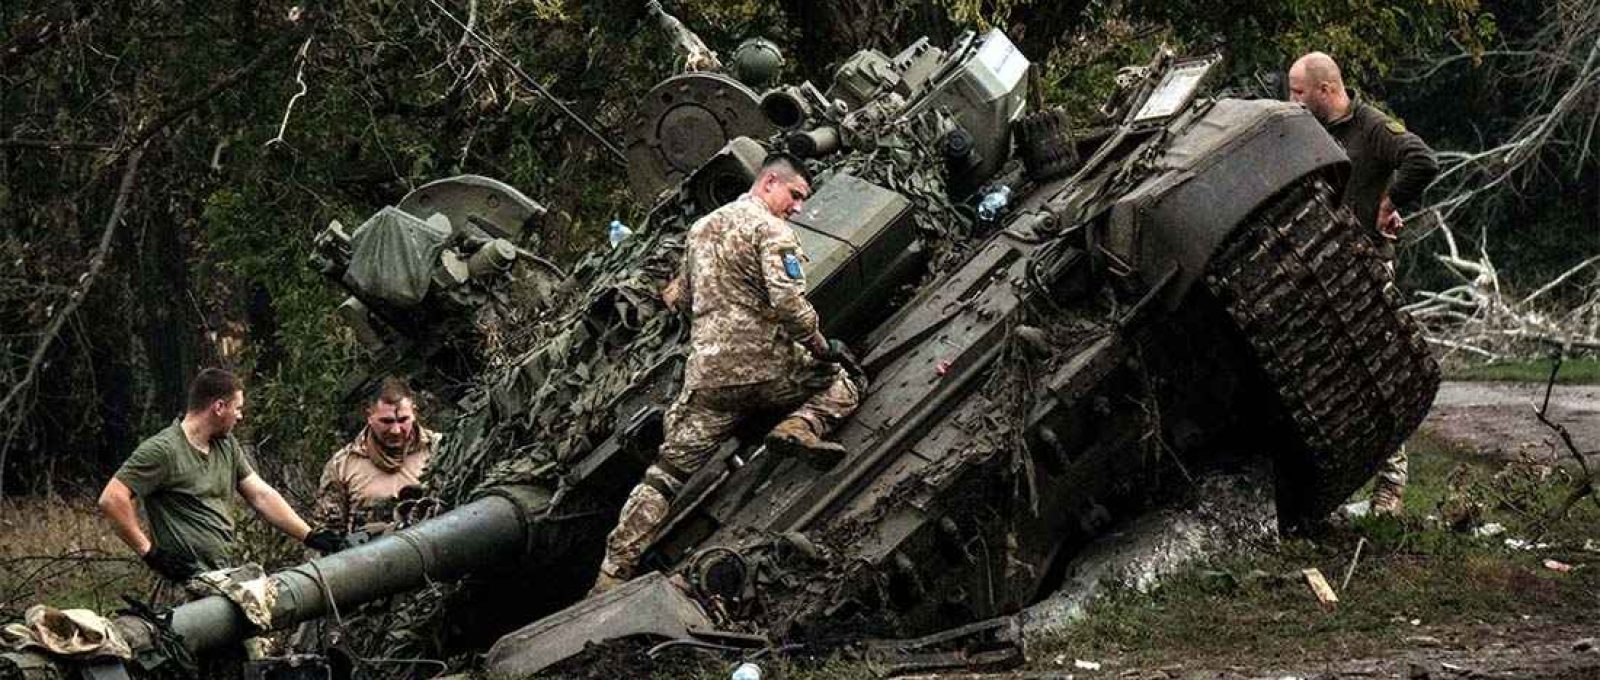 Soldados ucranianos inspecionam carro de combate russo abandonado (Yasuyoshi Chiba/AFP).